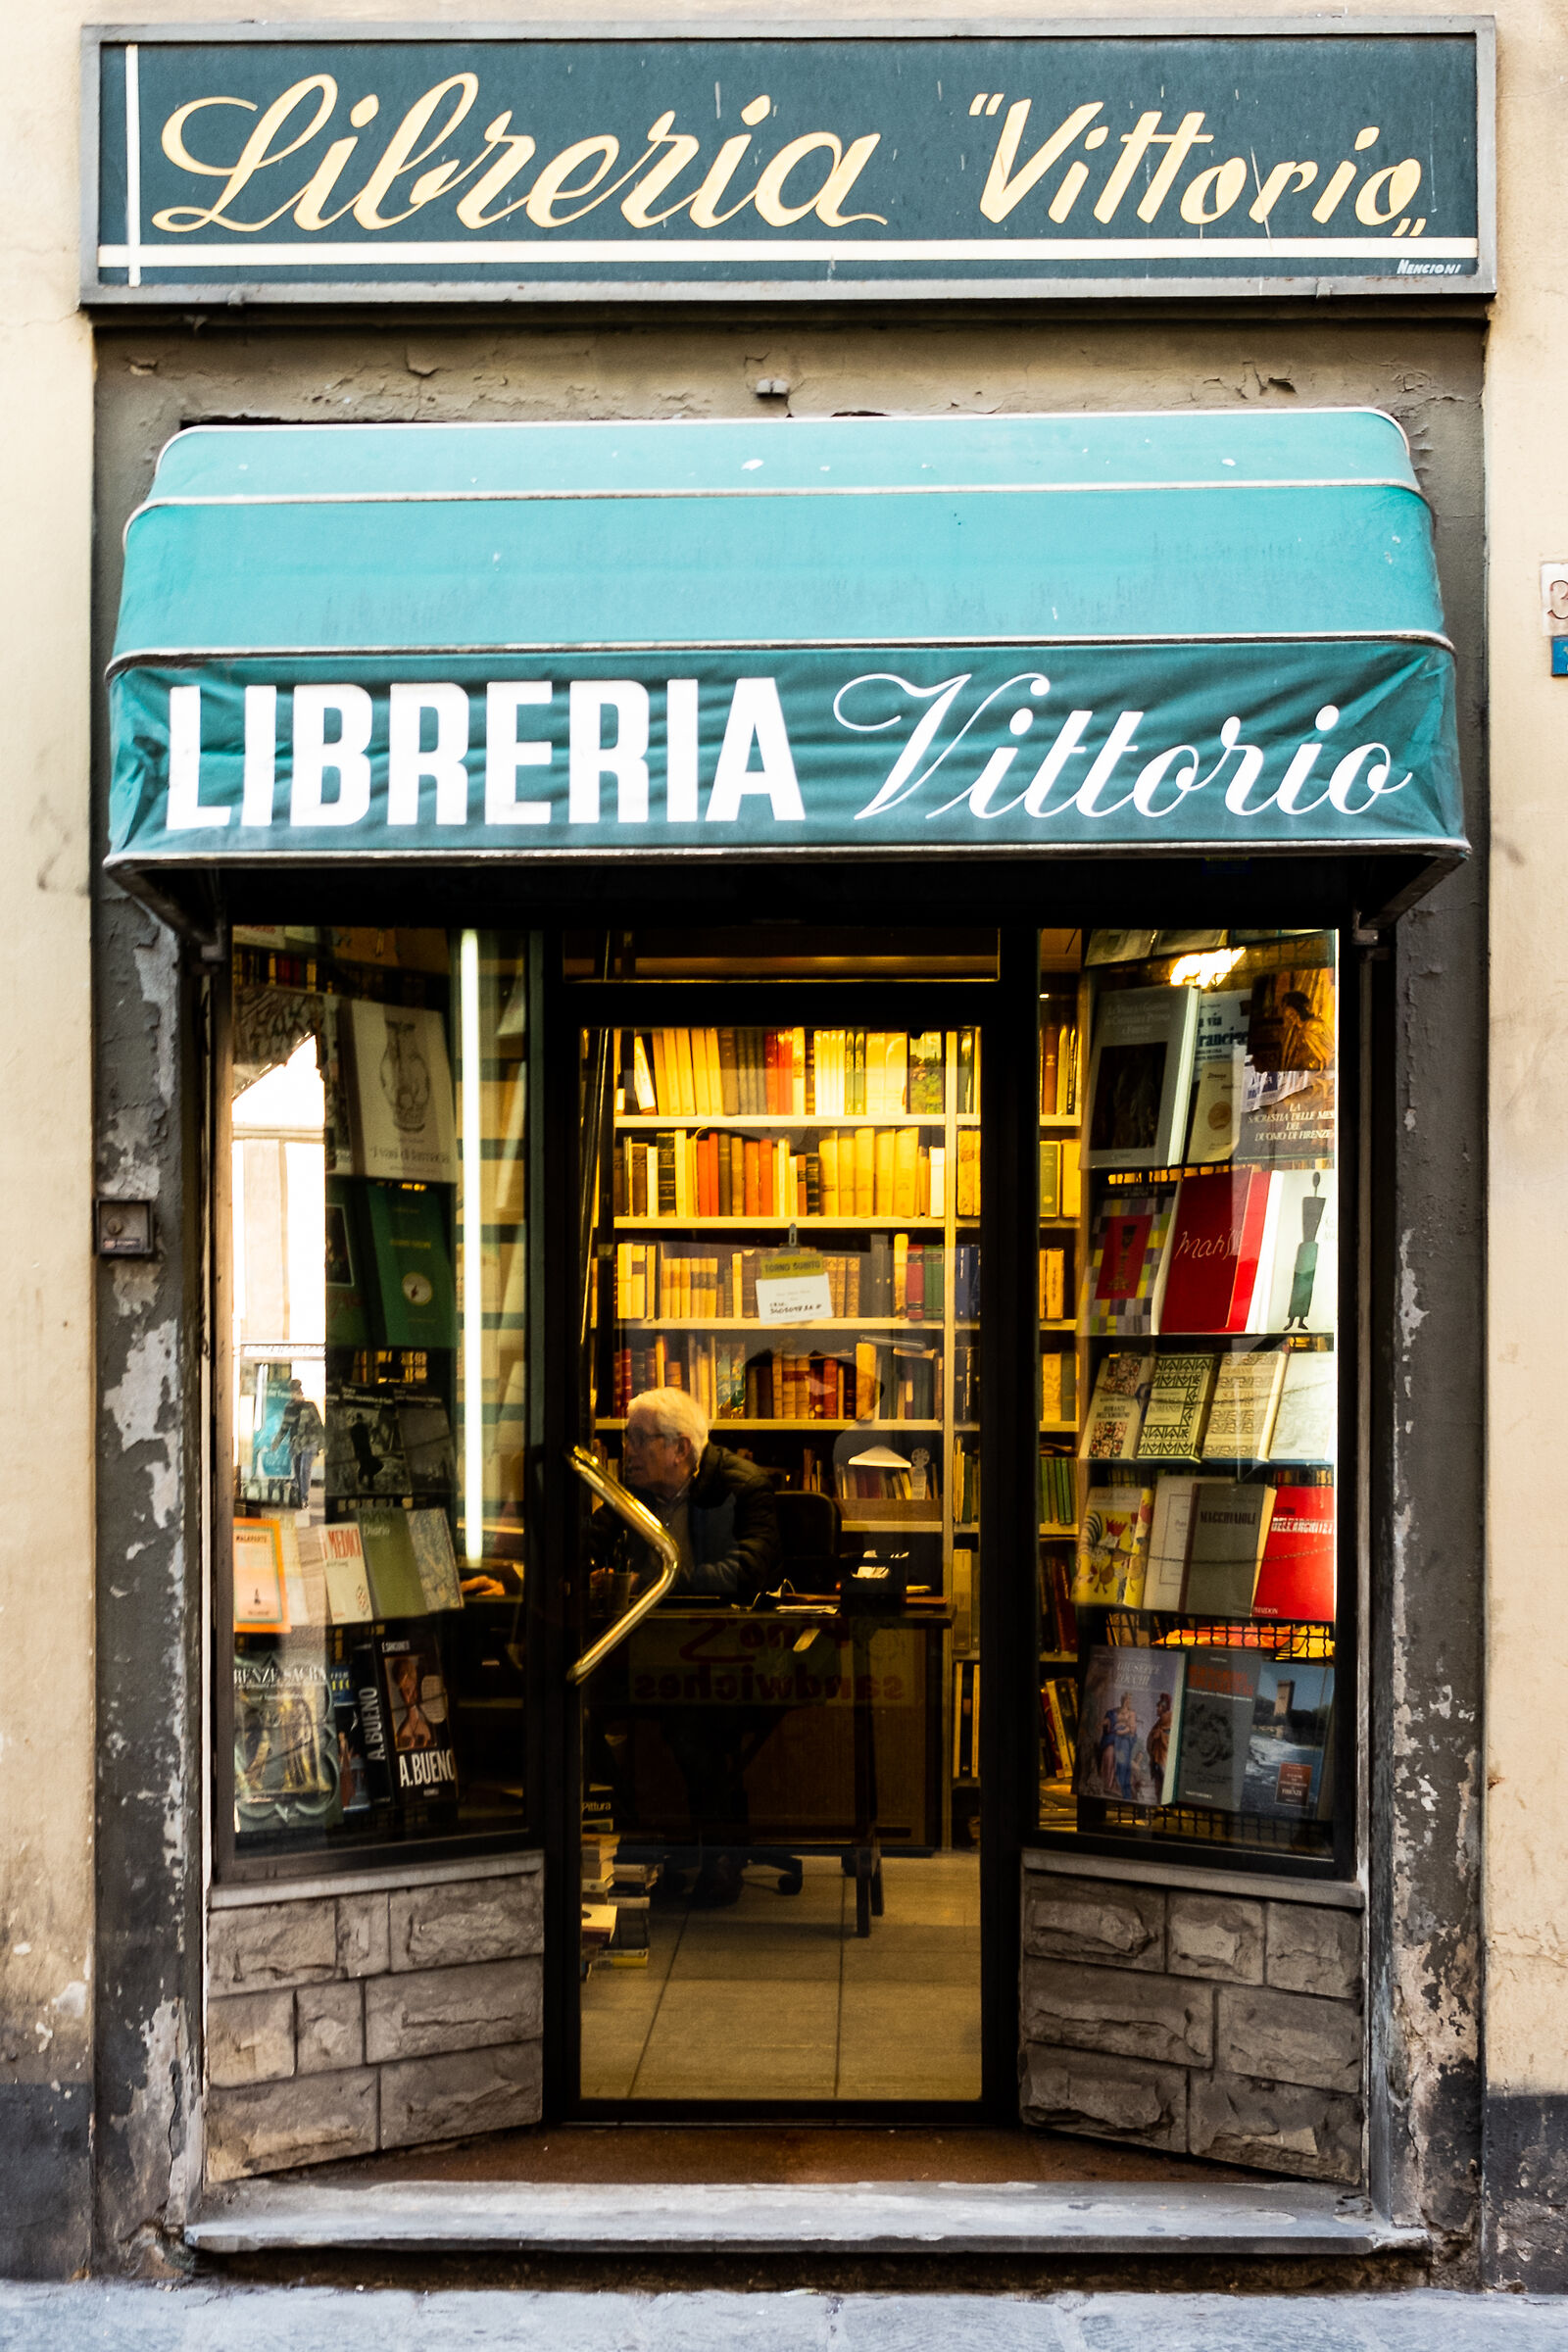 Vittorio and his Bookshop...